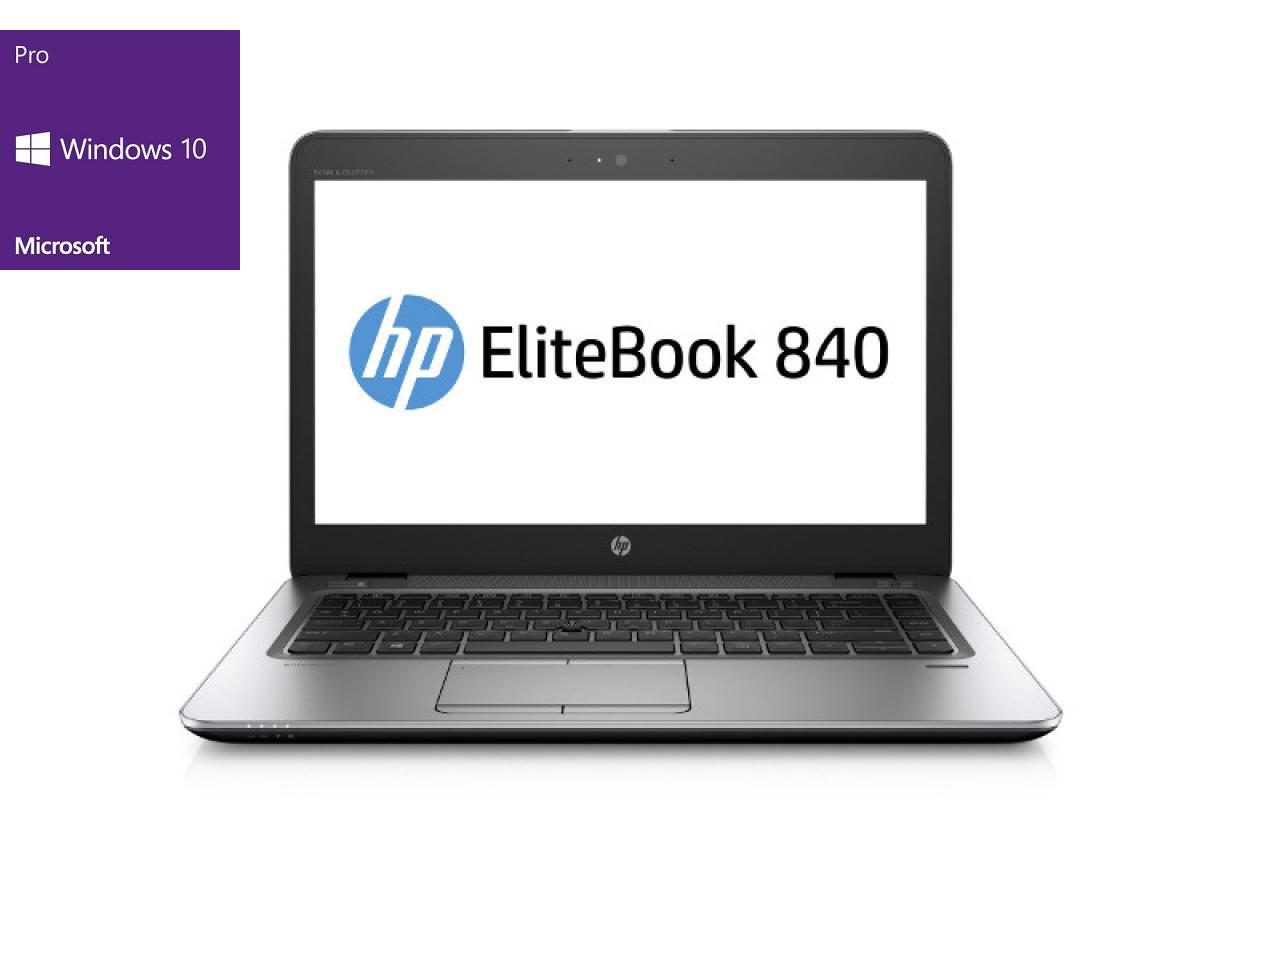 Hewlett Packard EliteBook 840 G4